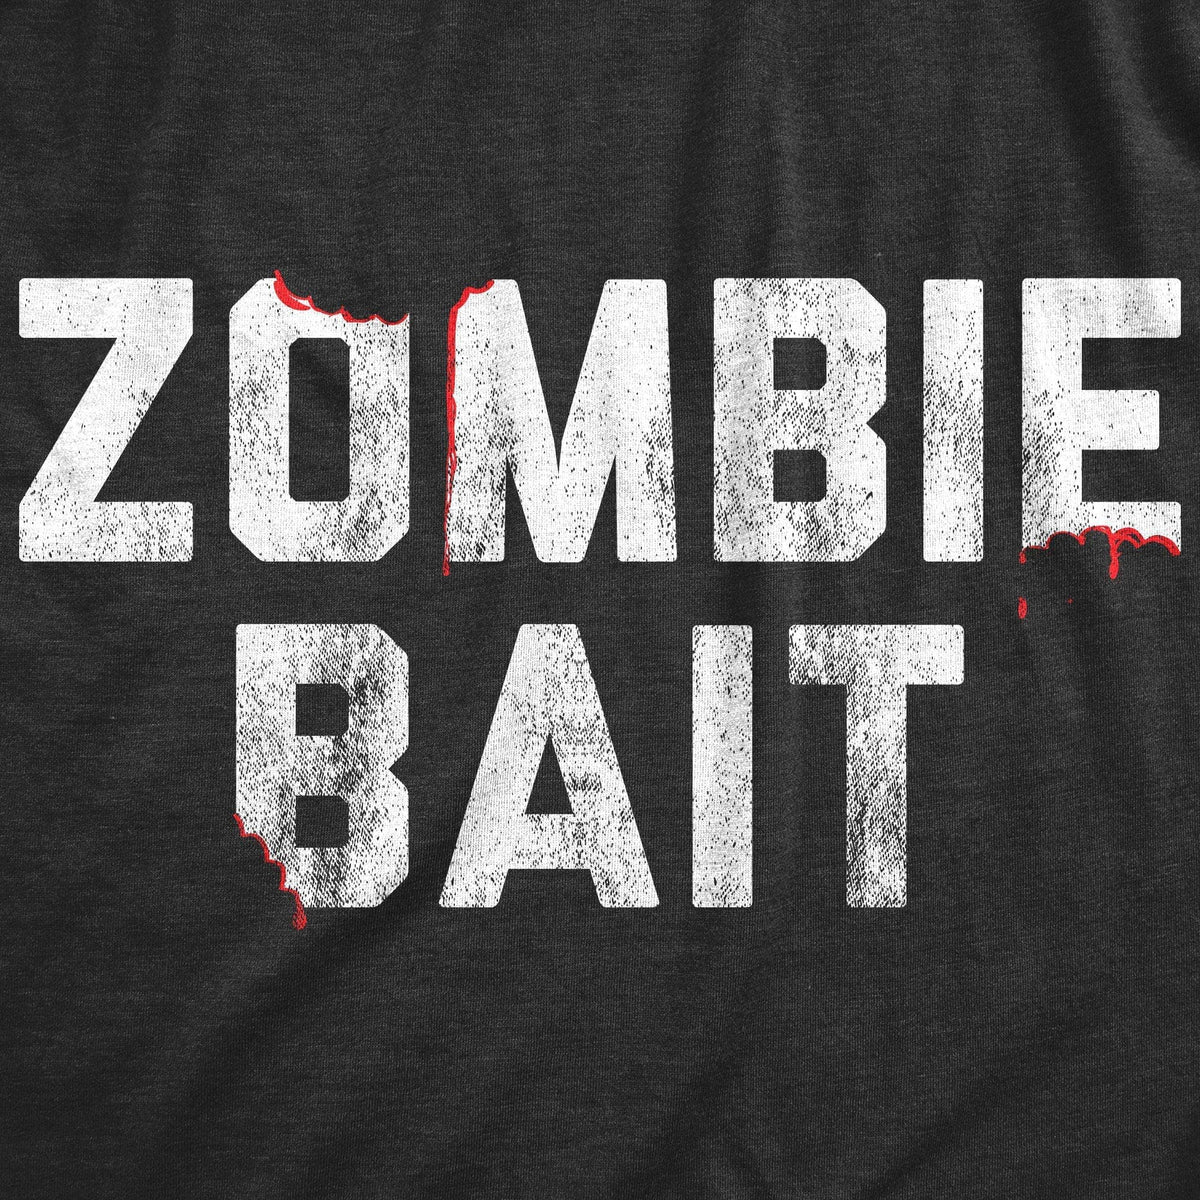 Zombie Bait Women&#39;s Tshirt - Crazy Dog T-Shirts